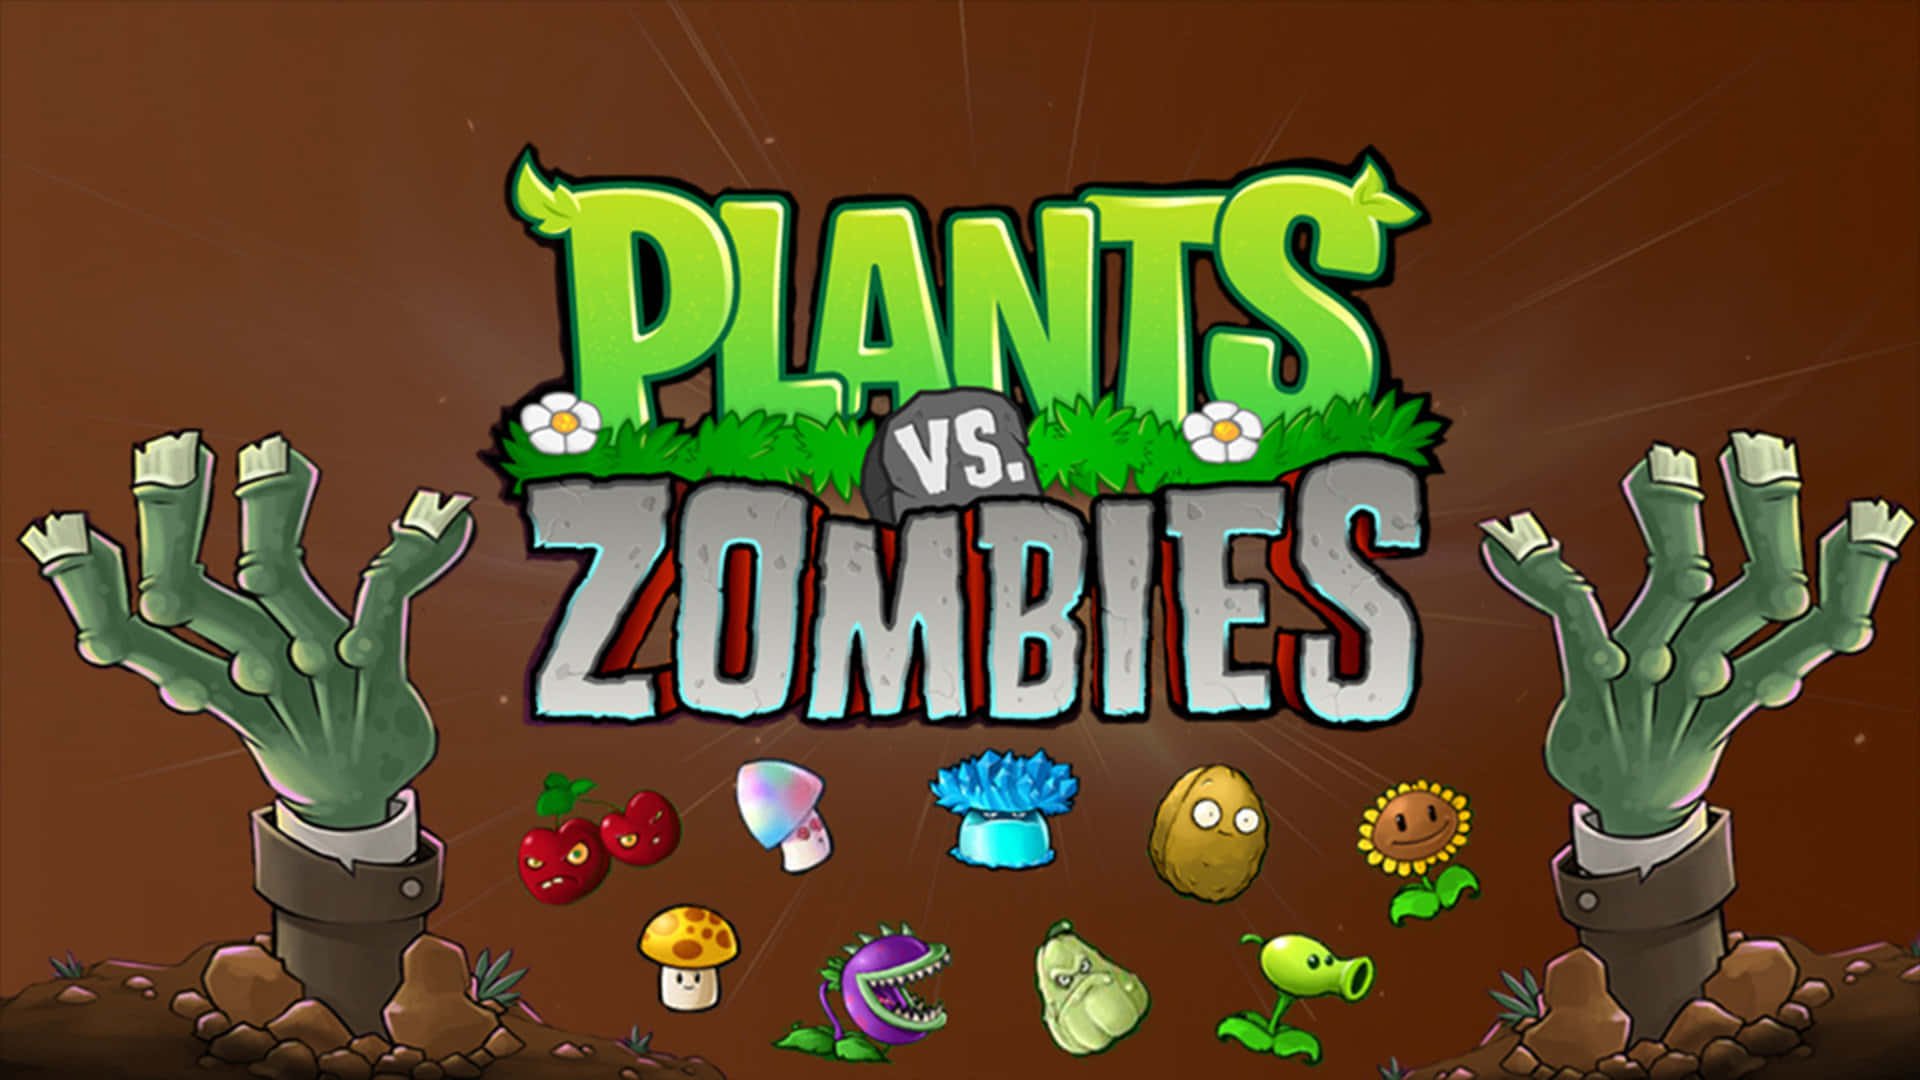 Плентс версус зомби. Растения против зомби 1 зомби. Игра Plants vs Zombies 4. Растения из растения против зомби 1. Растение против зомби растения зомби.